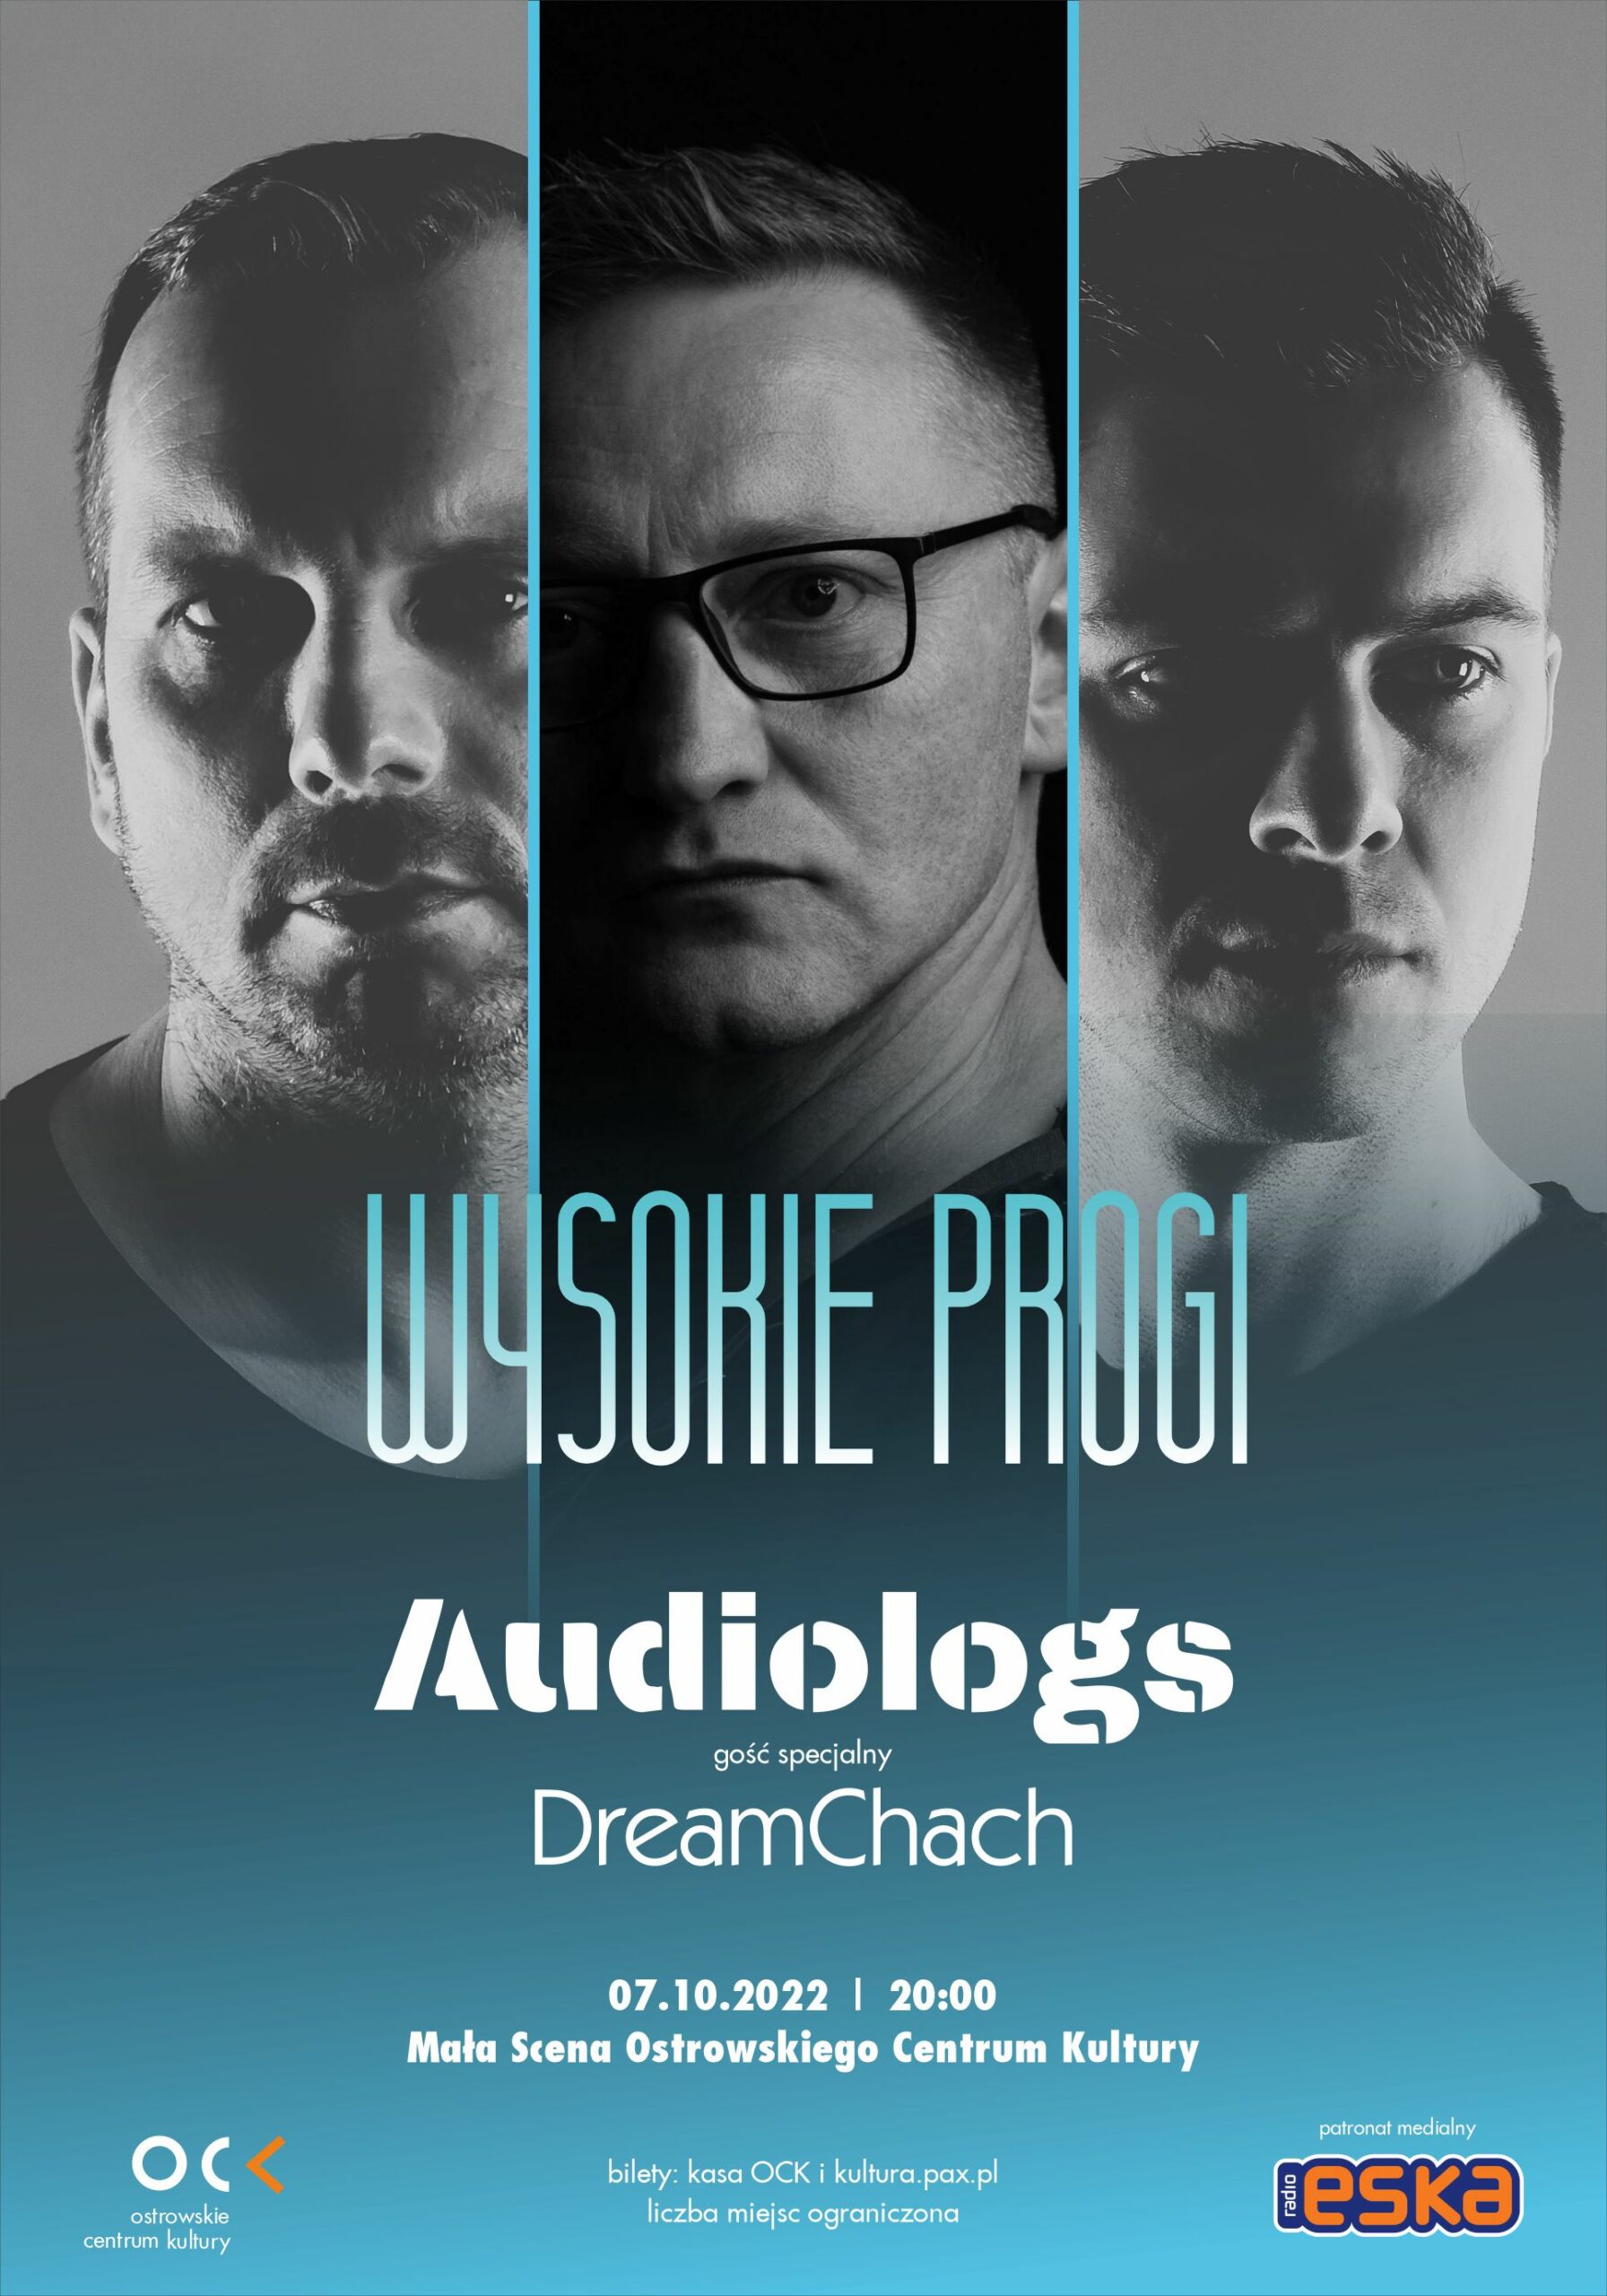 Wysokie progi   Audiologs   DreamChach